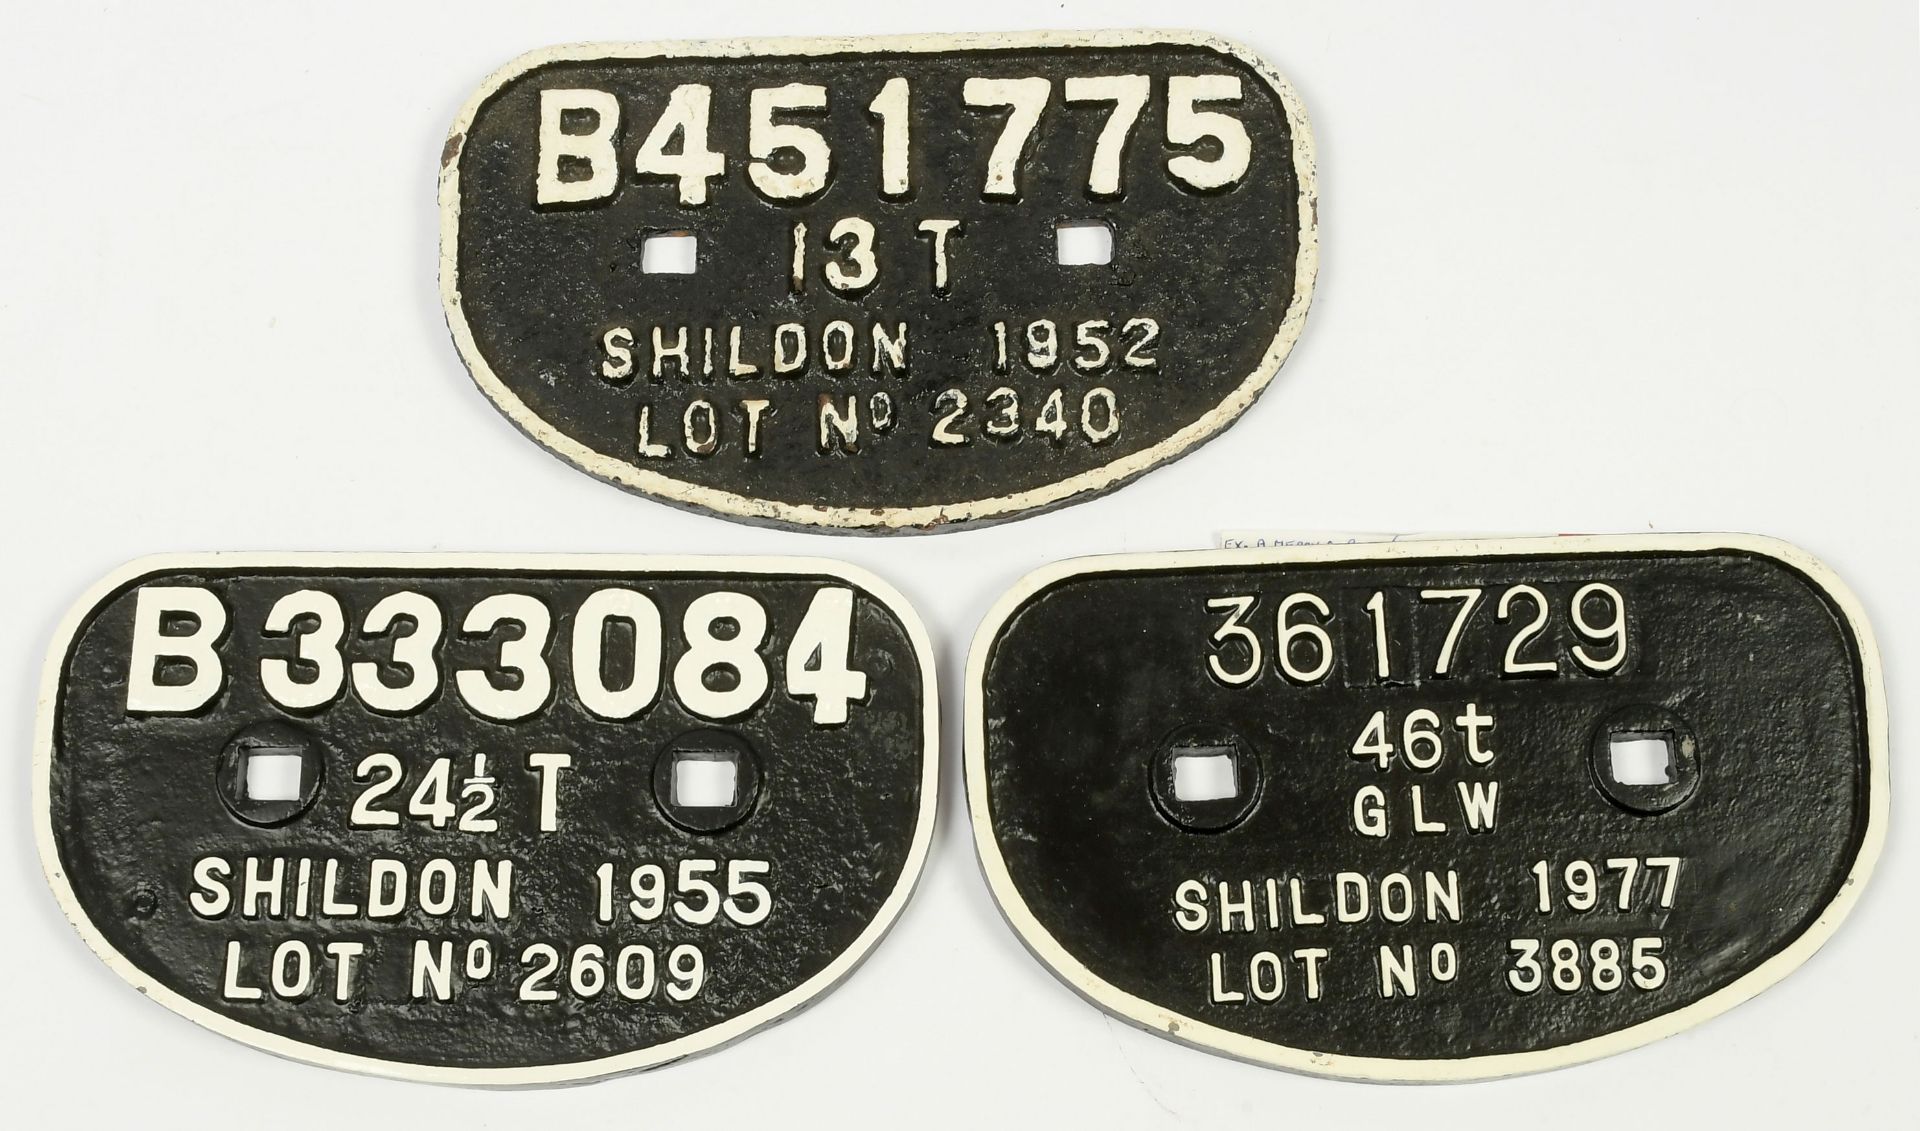 GRP inc Railwayana BR Wagon Plates (1) "B451775"